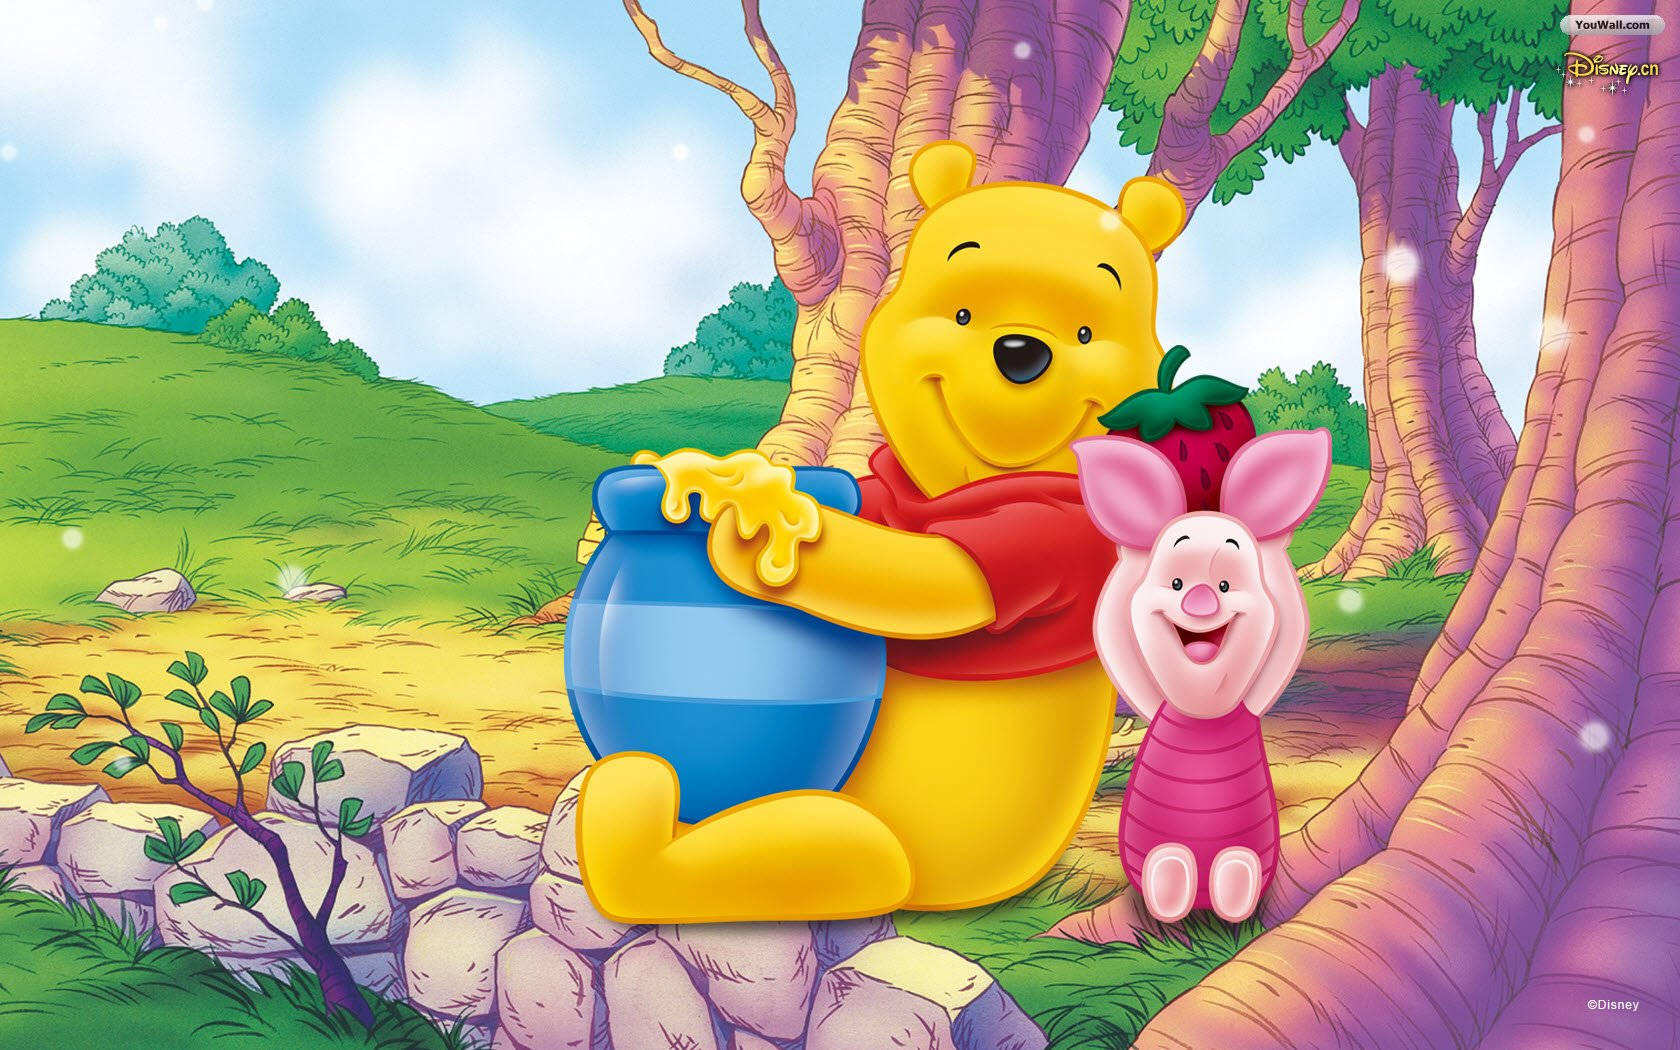 Winnie The Pooh Iphone Display